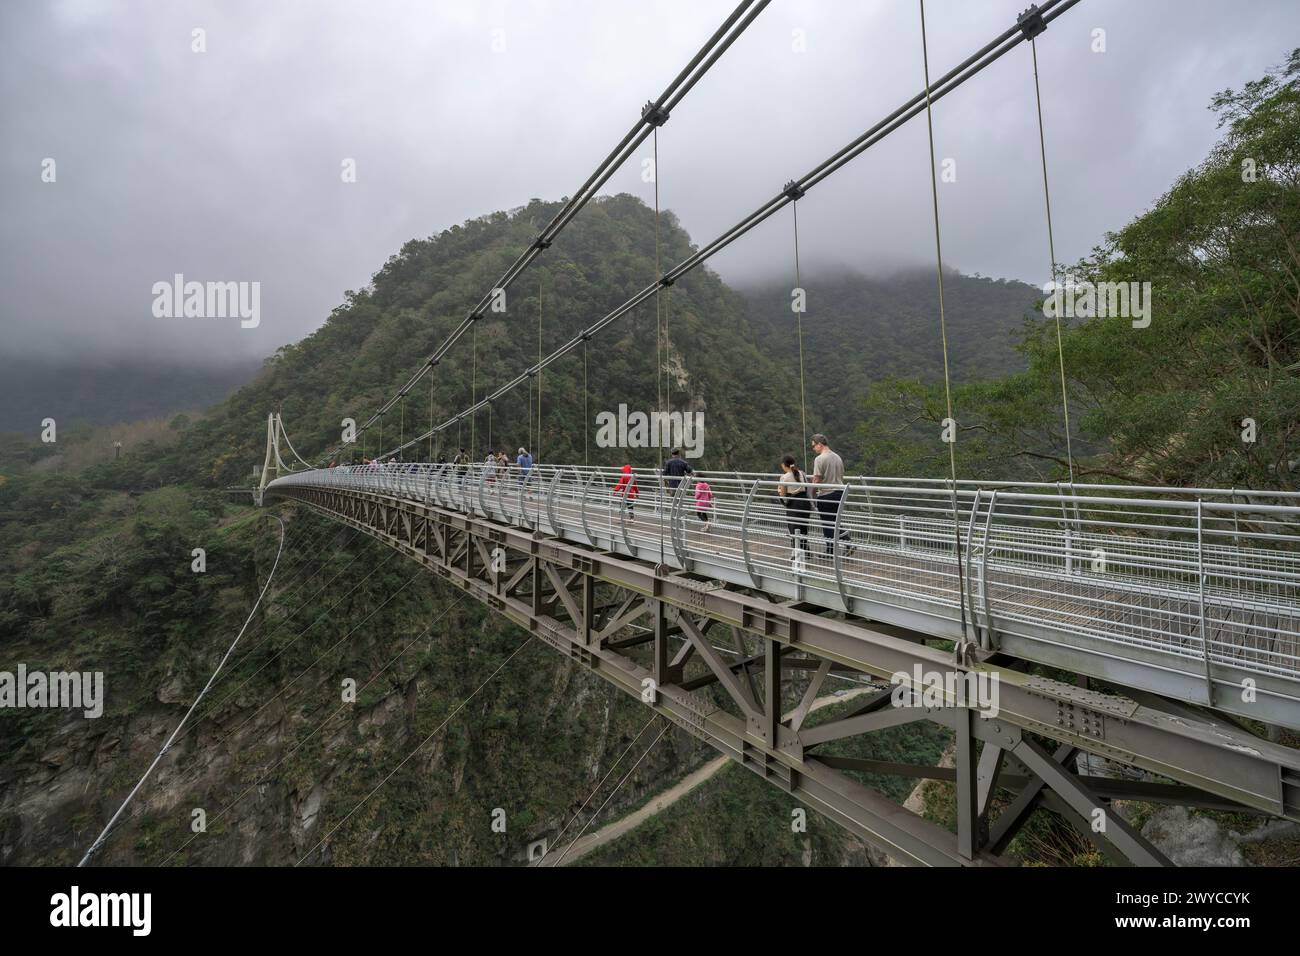 People cross a modern suspension bridge enveloped by fog in a mountainous landscape over Taroko gorge Stock Photo